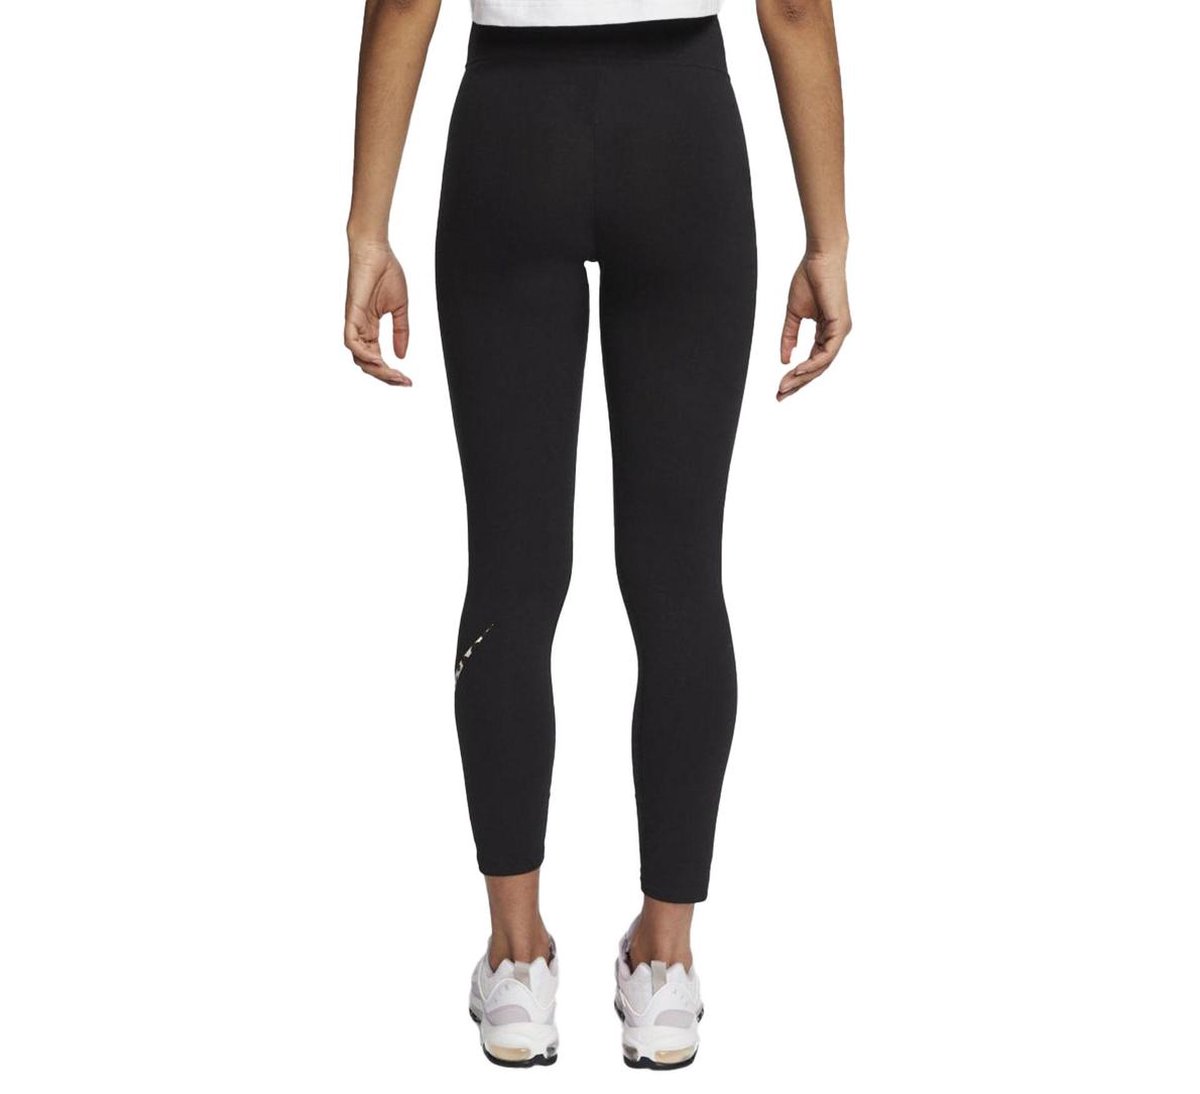 Nike Legging Dames - Zwart/Bruin - Maat L